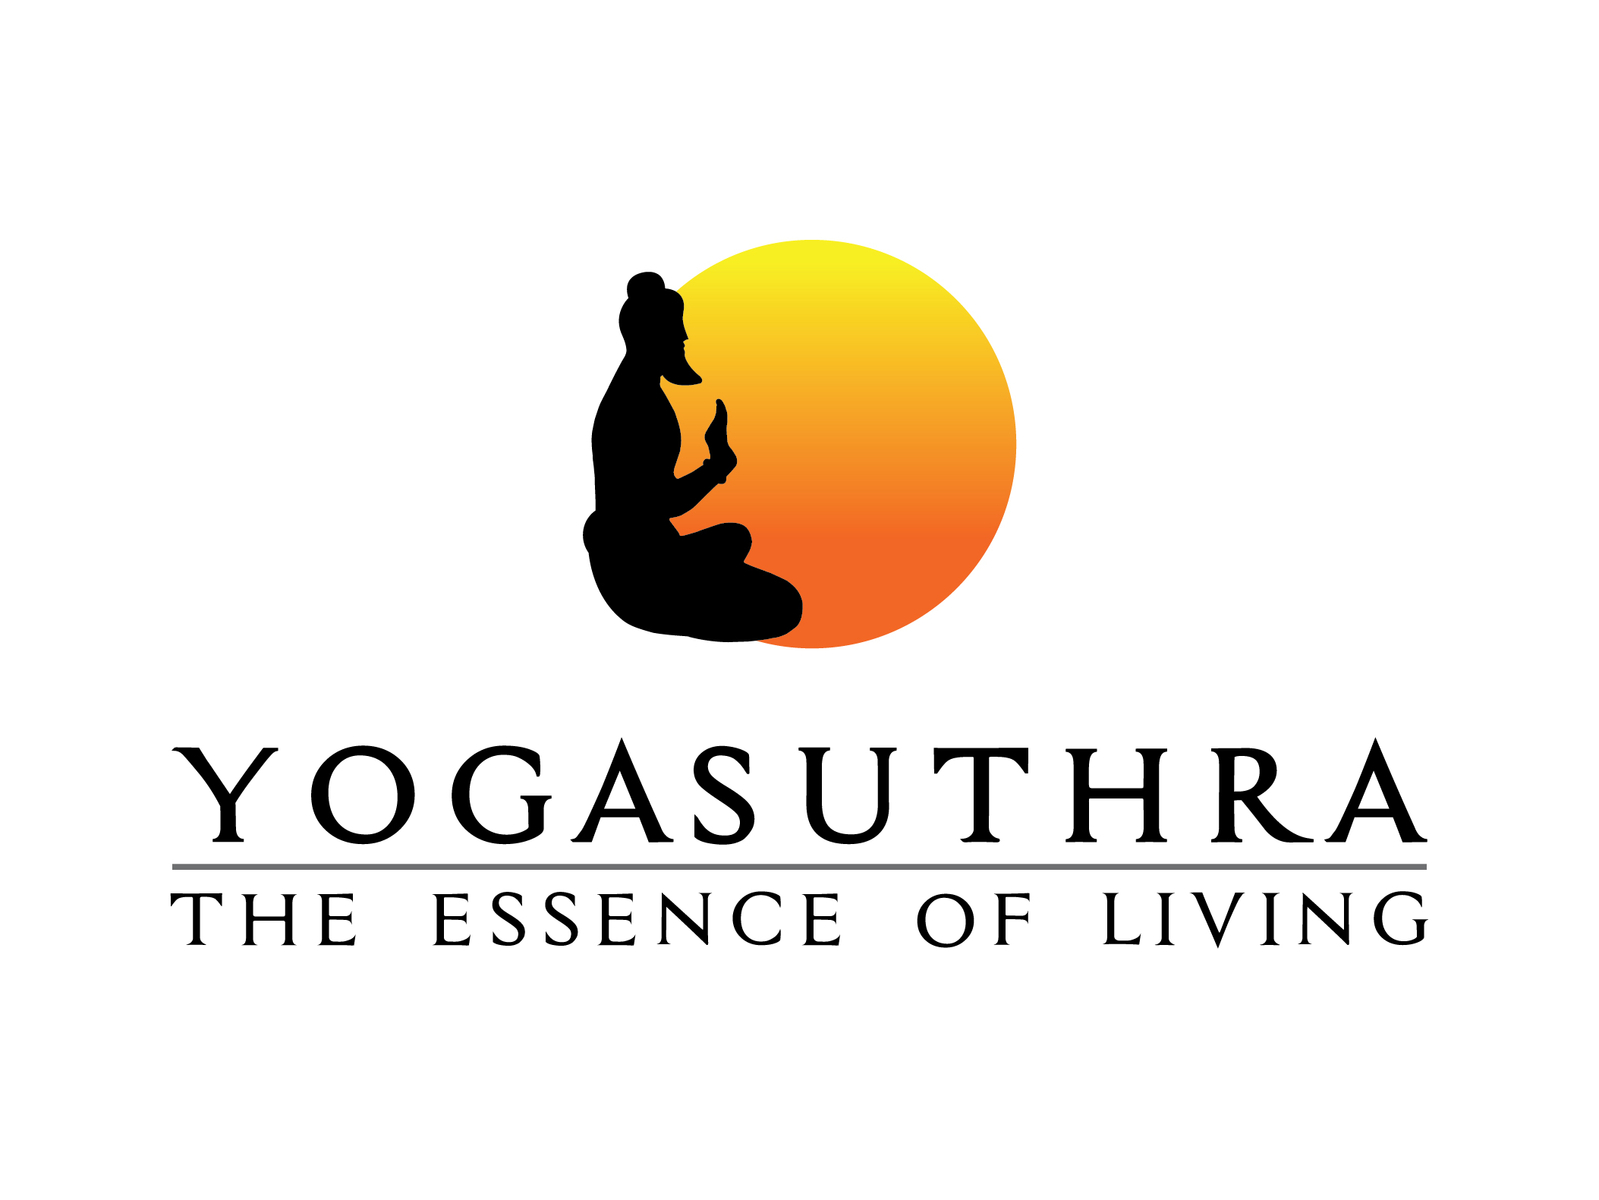 Yogasuthra Logo by Reeja on Dribbble